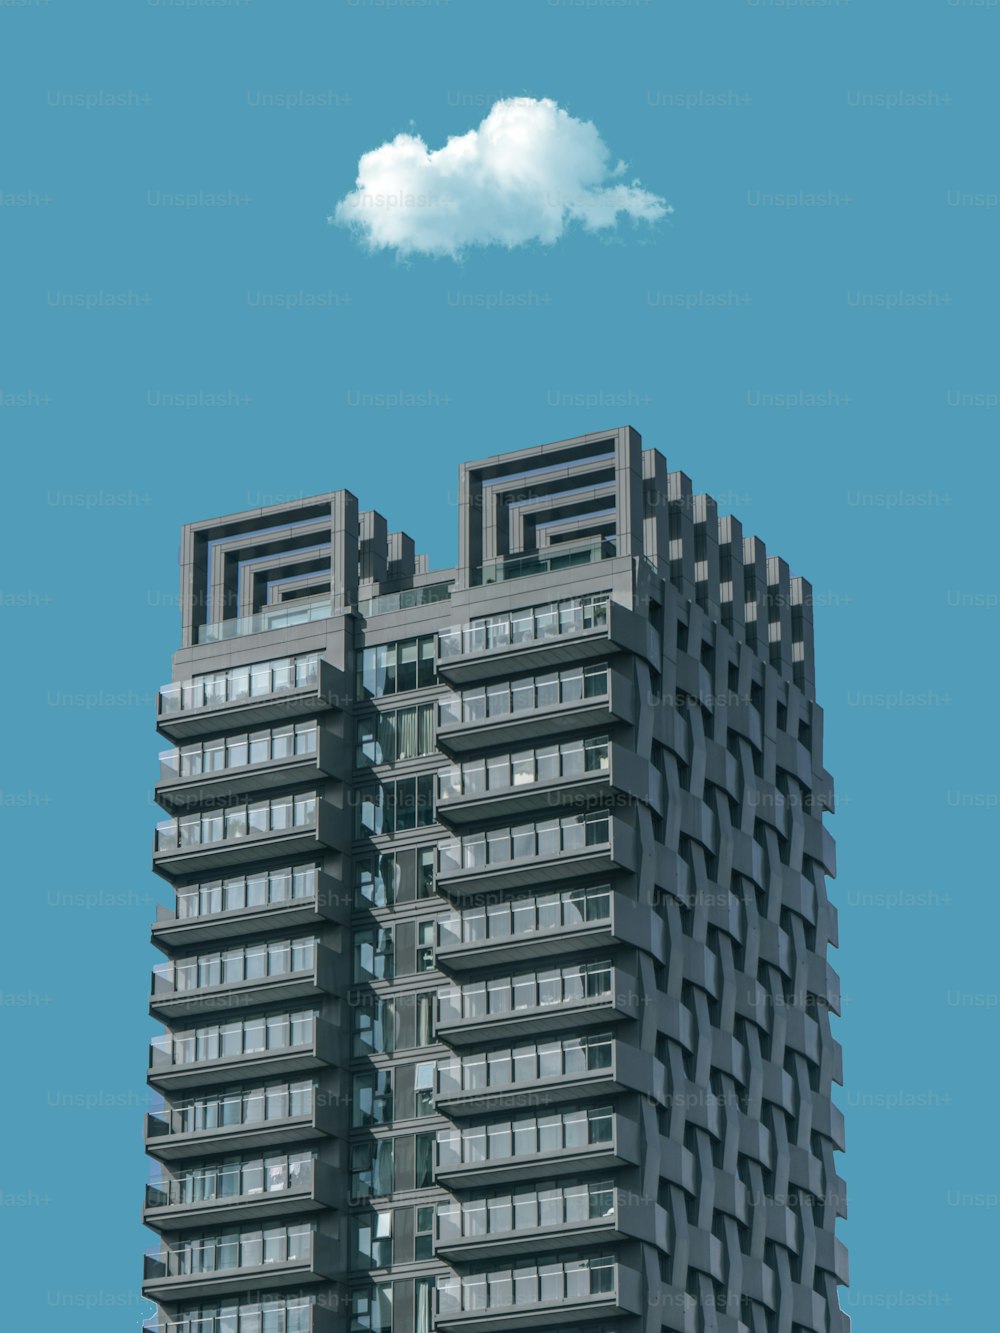 Un edificio molto alto con una nuvola nel cielo